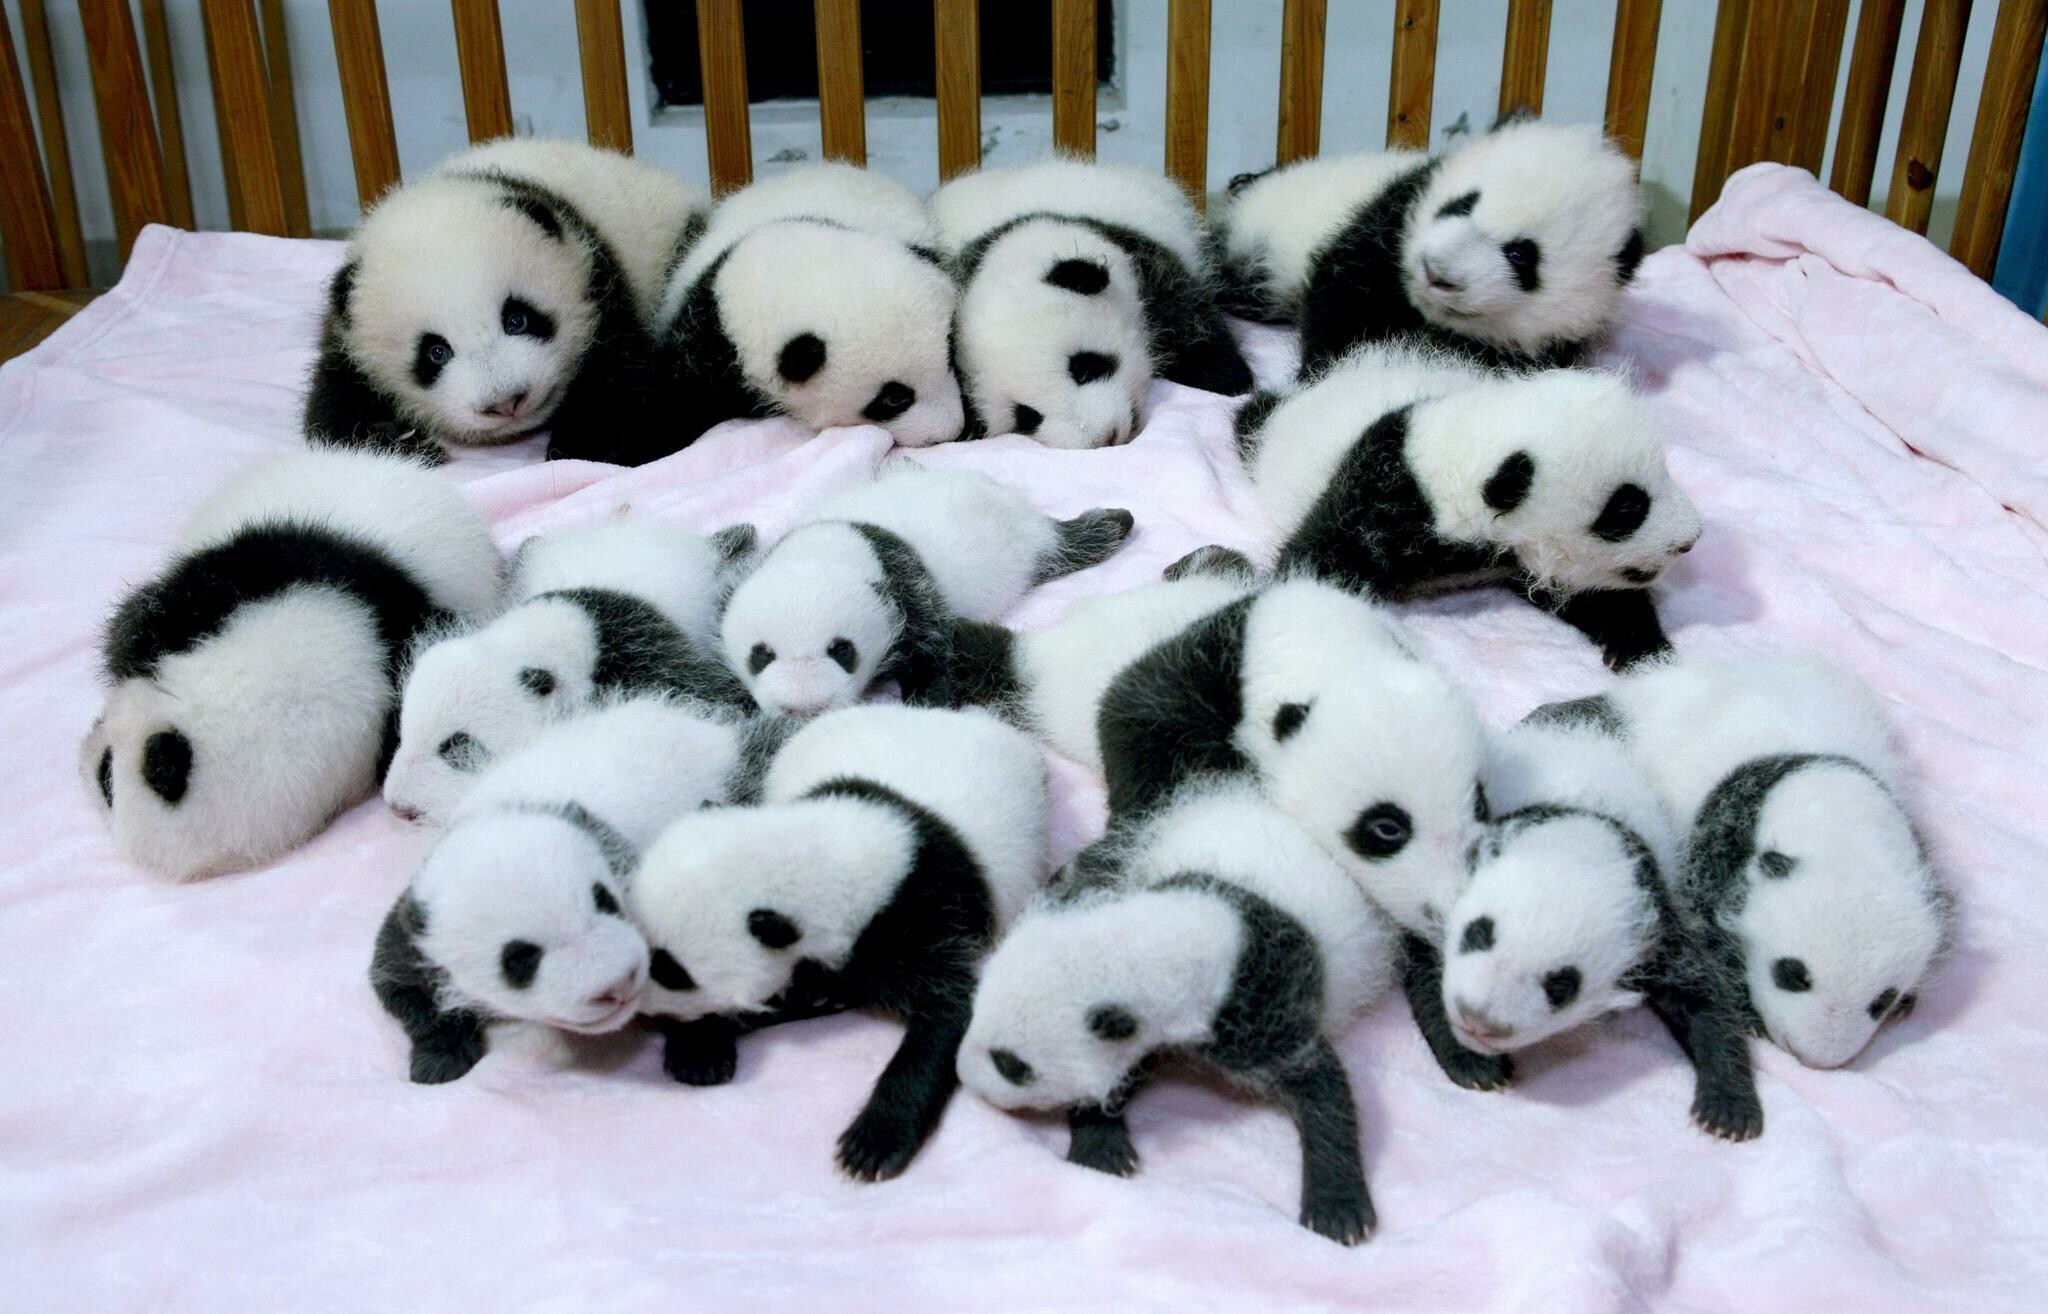 ArtStation - Baby Panda Bears